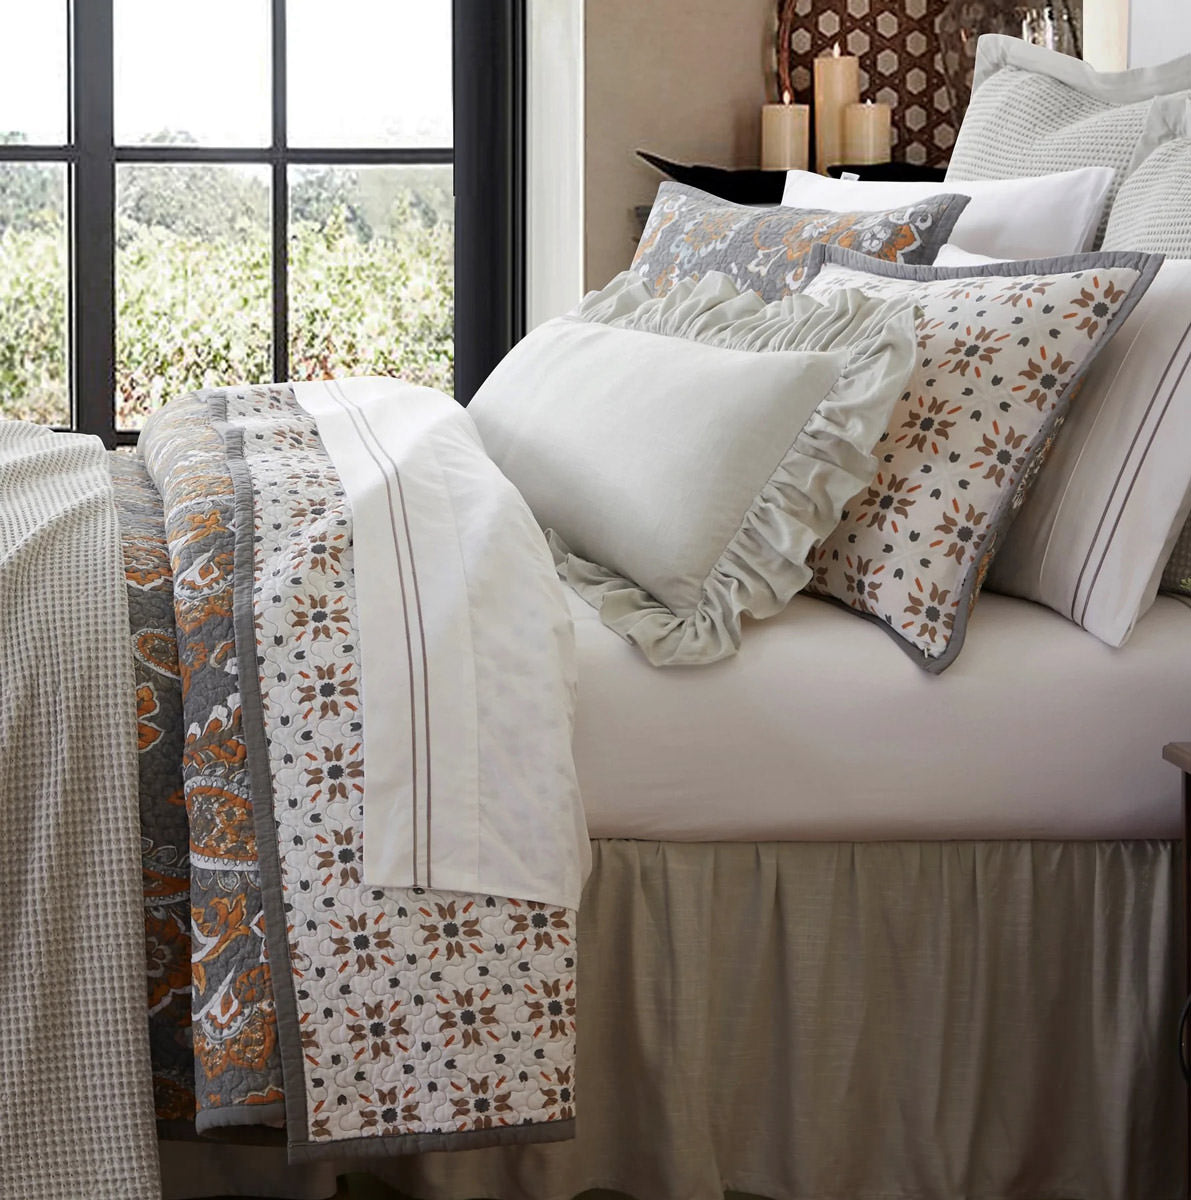 Gray Paisley 100% Cotton Bedding Set: Duvet Cover + Pillow Shams